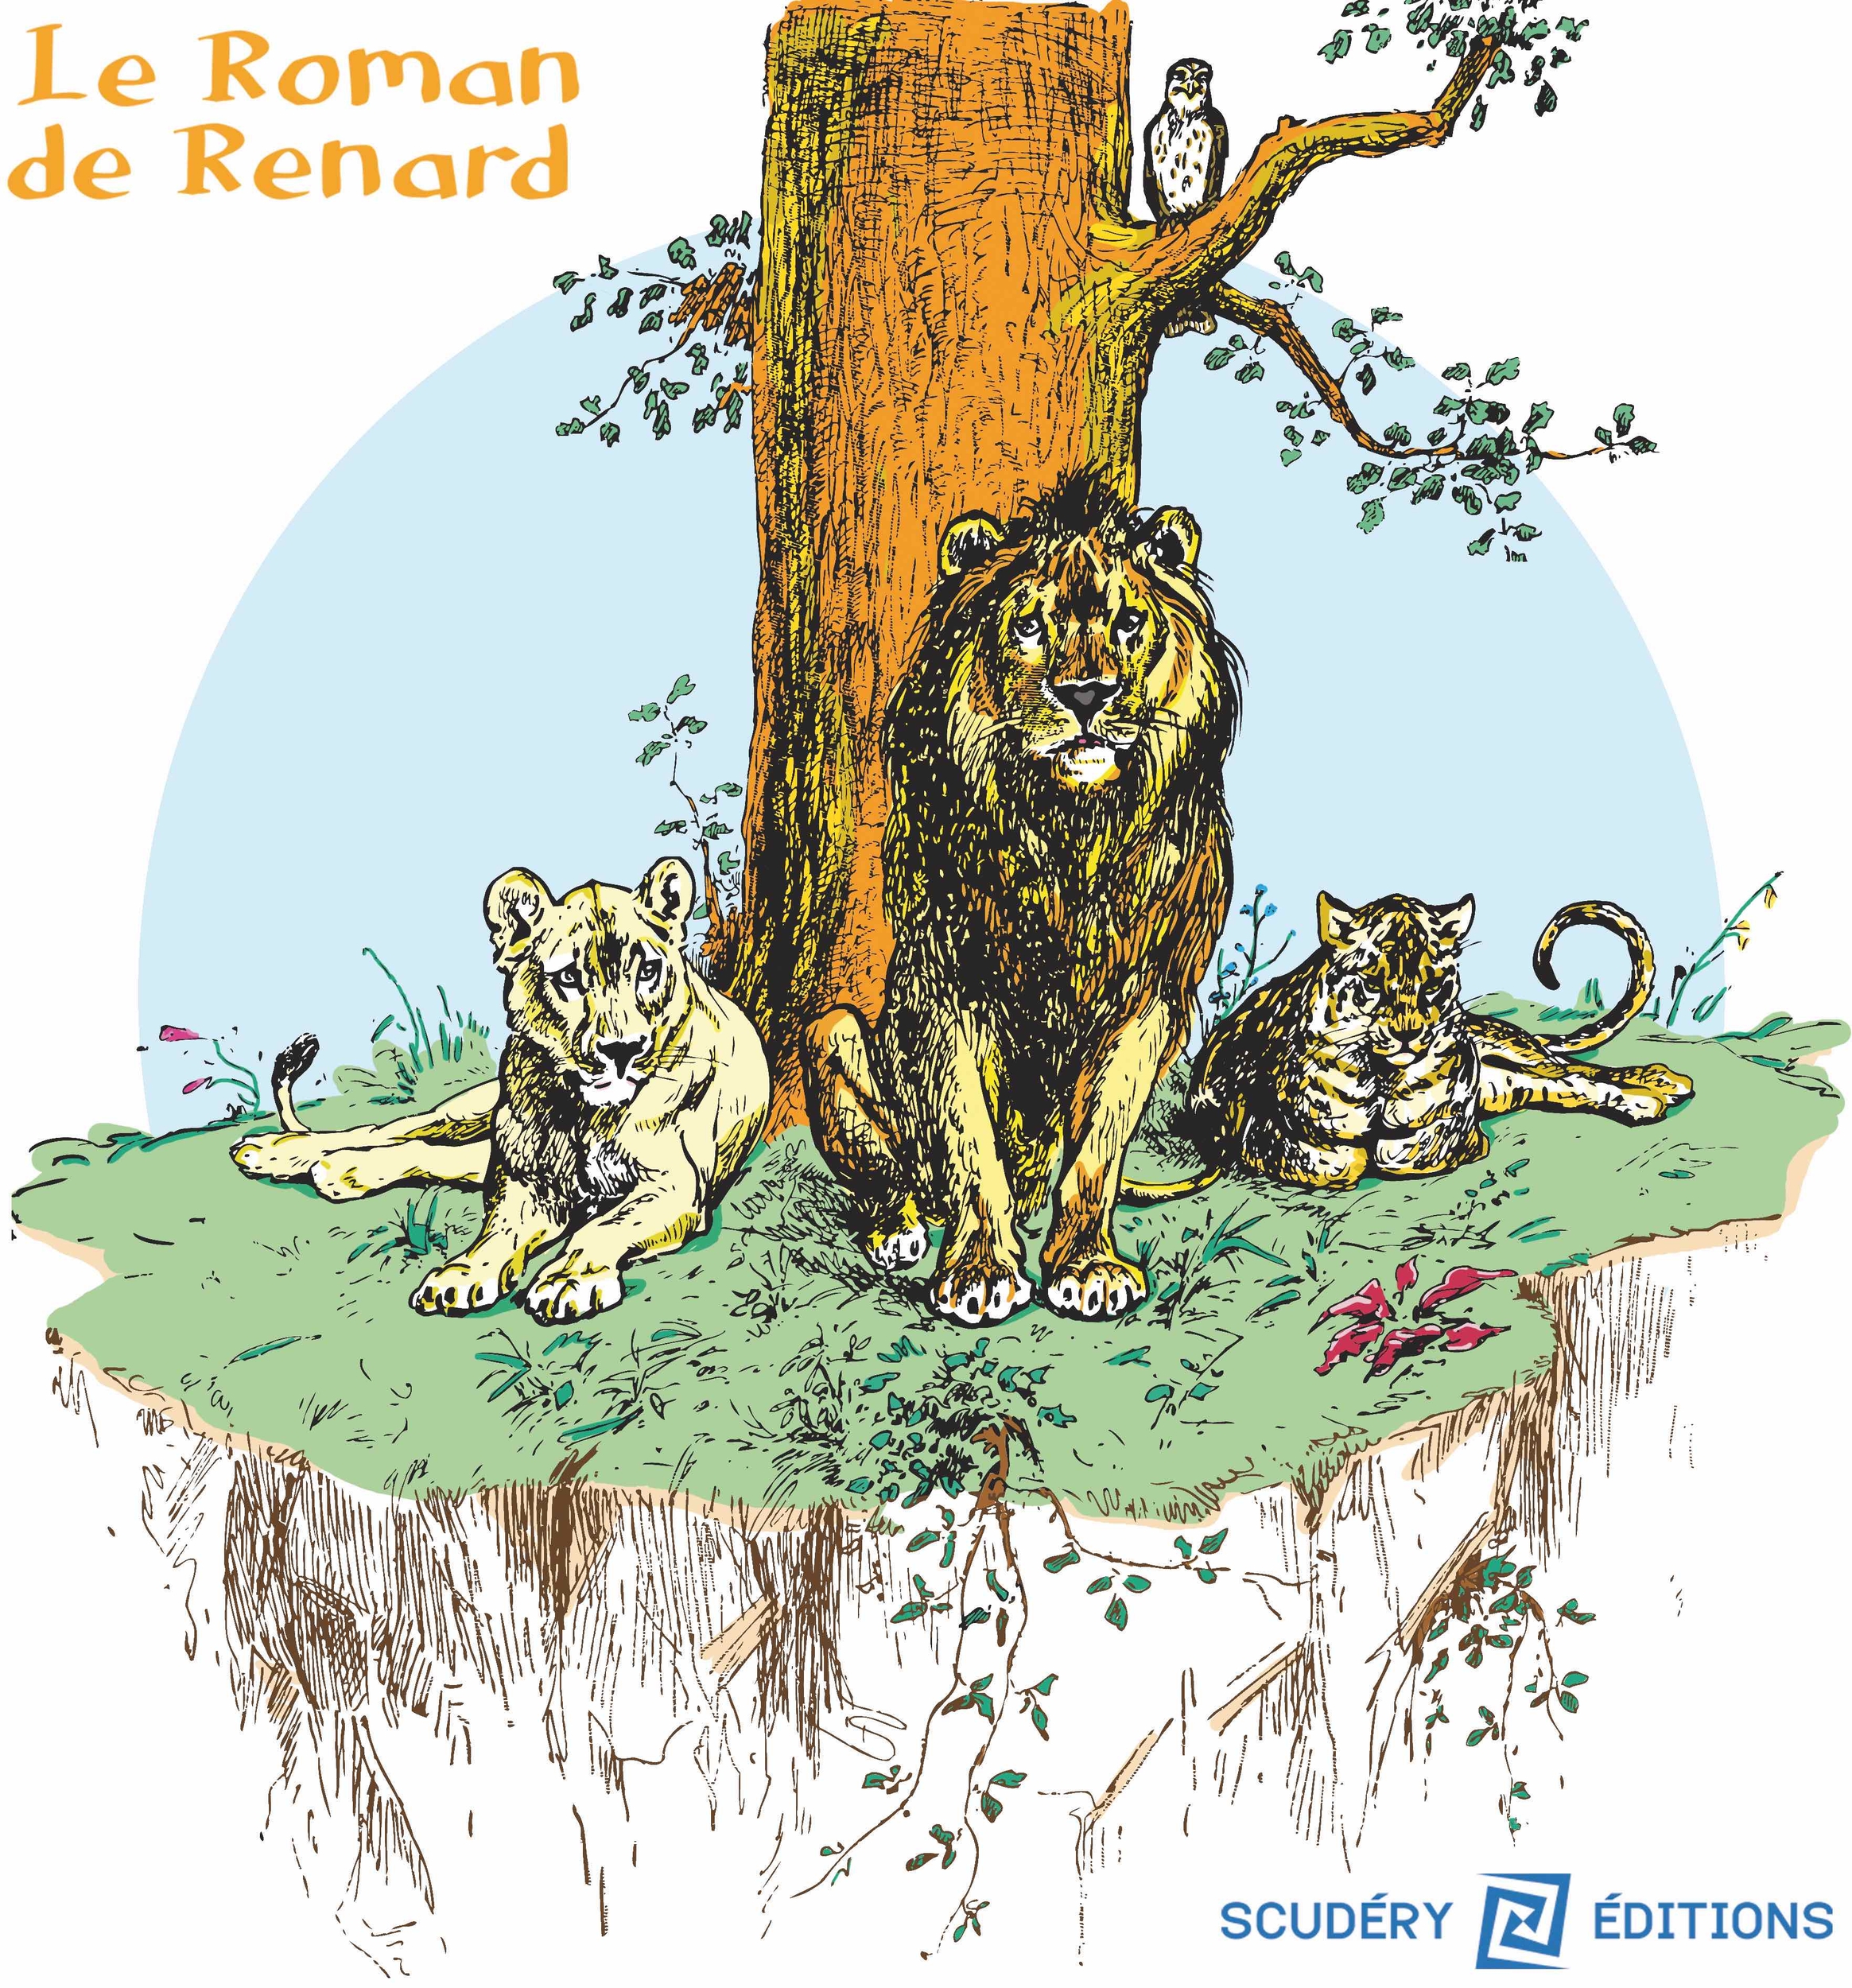 Roman de Renard LION p 28 Scudery editions VL